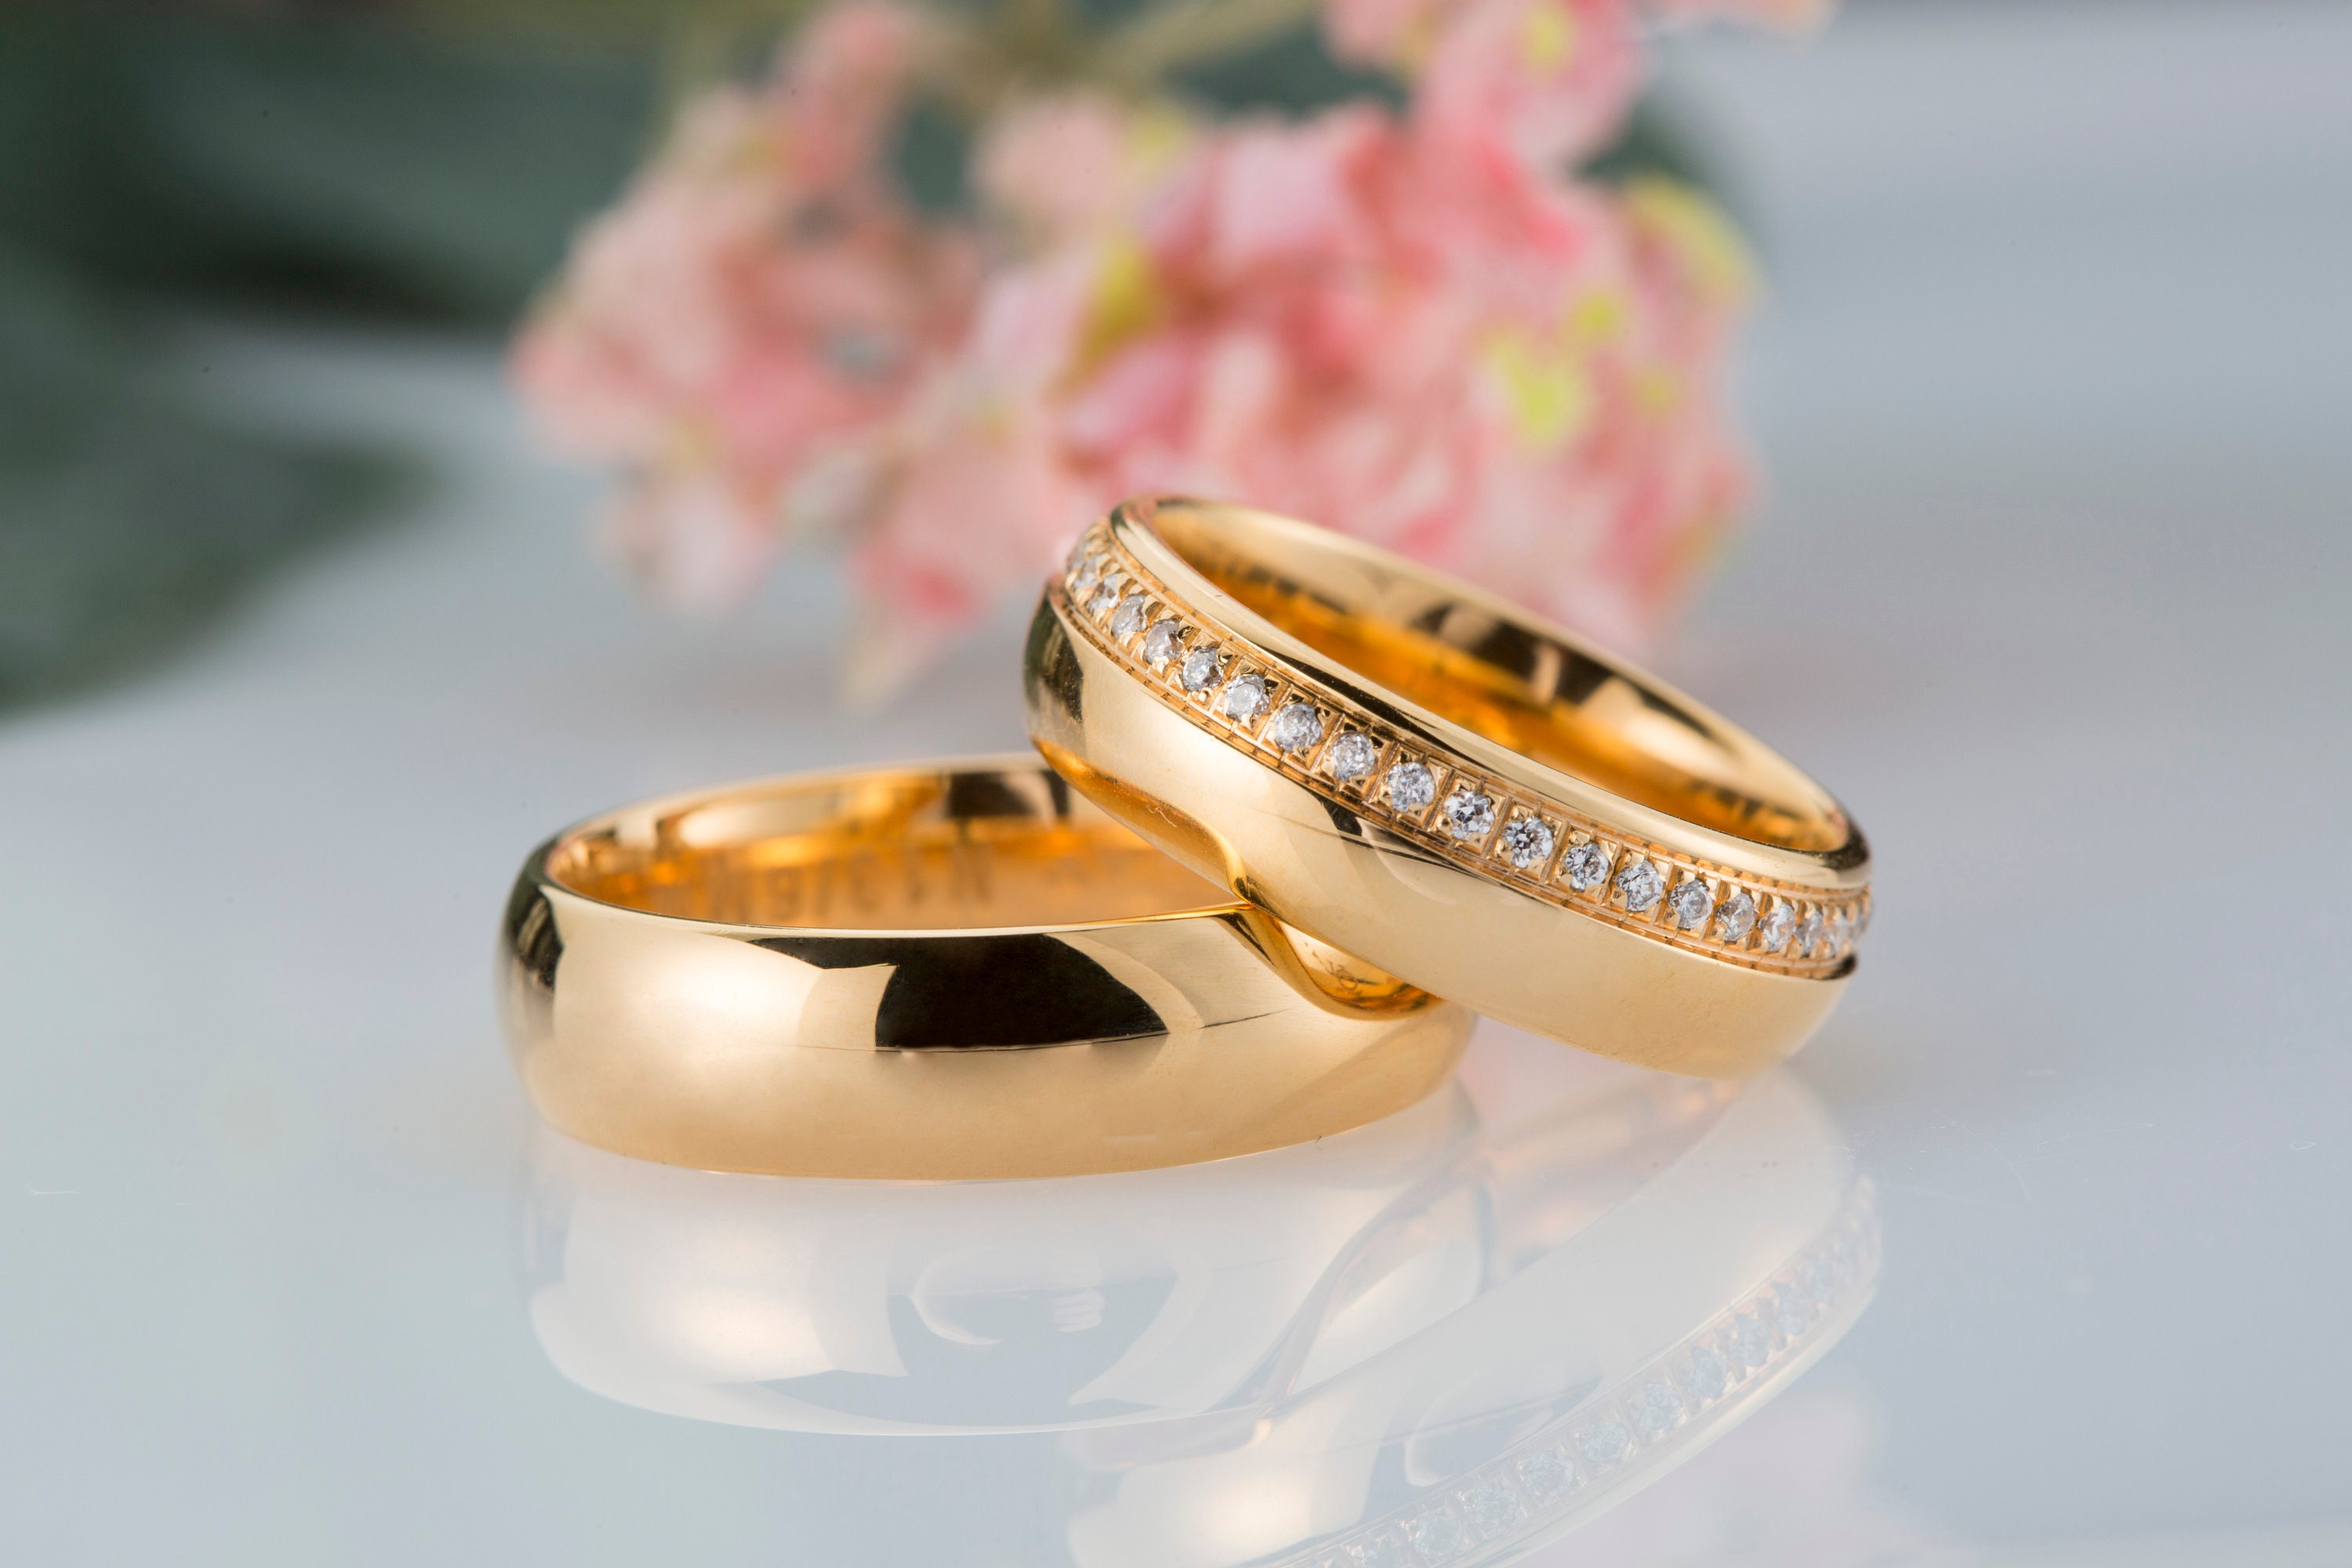 Buy Silver Rings for Women by Karatcart Online | Ajio.com